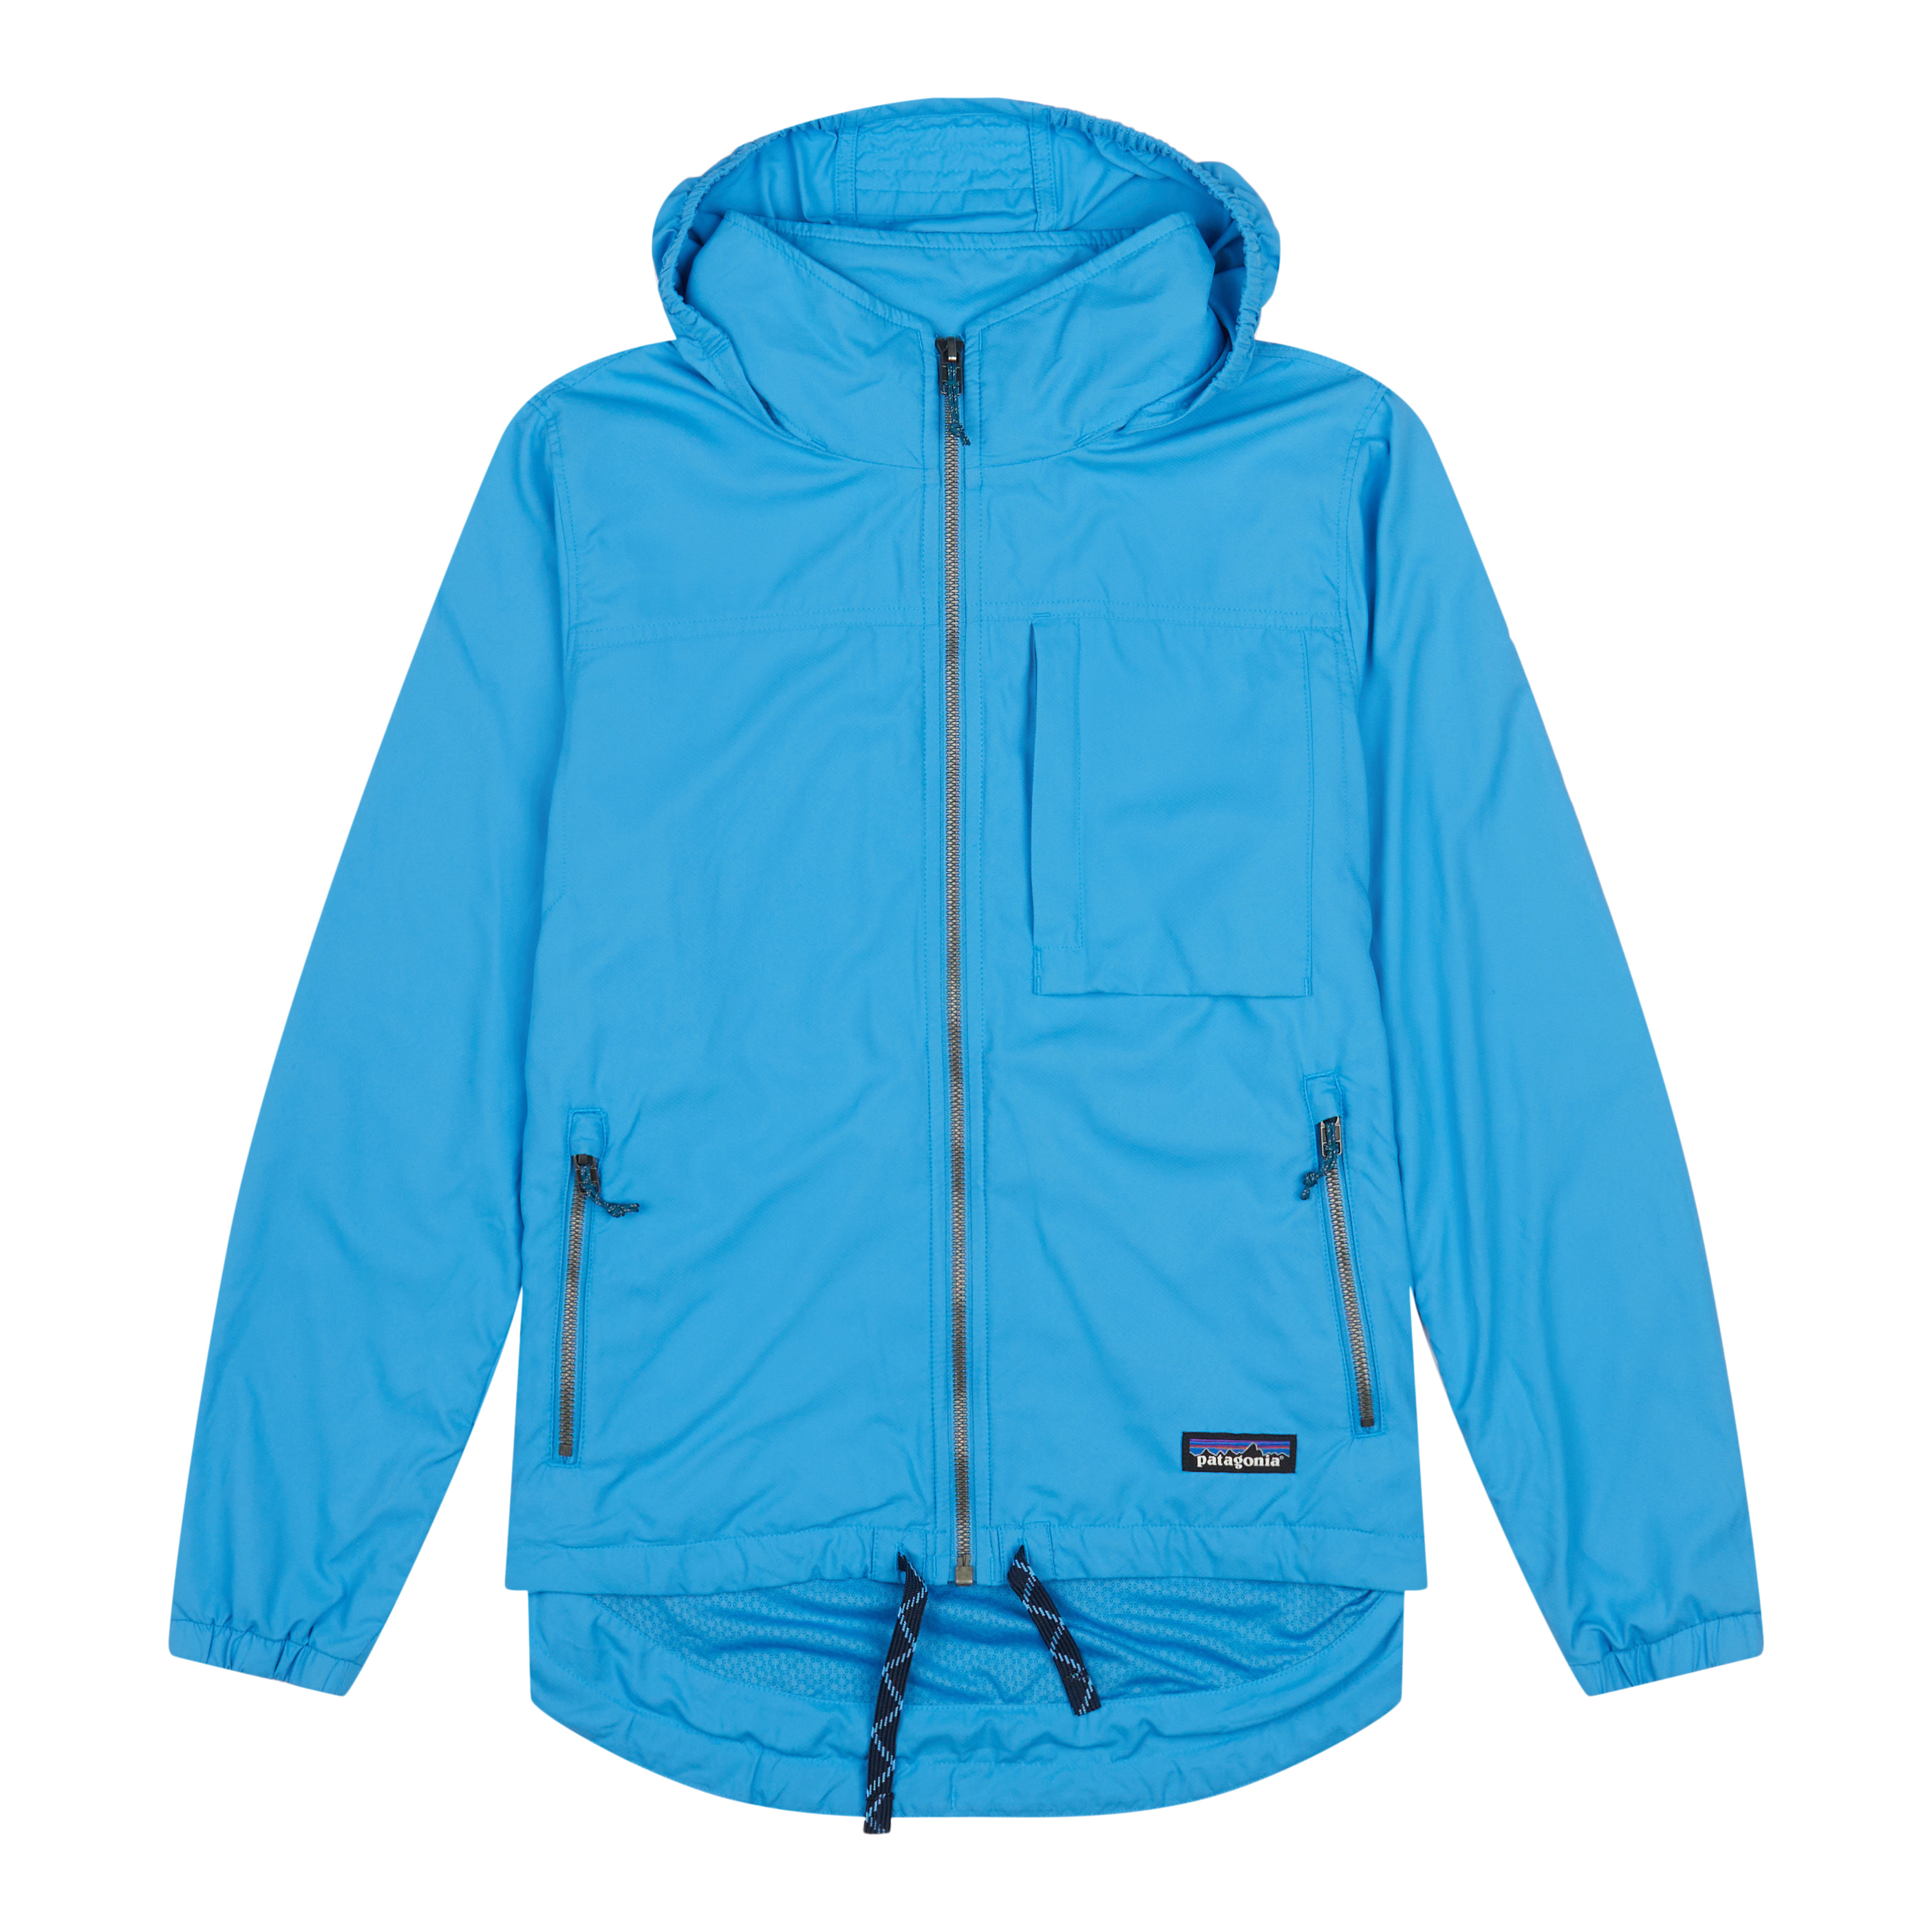 Patagonia Worn Wear Women's Mountain View Jacket Dolomite Blue - Used